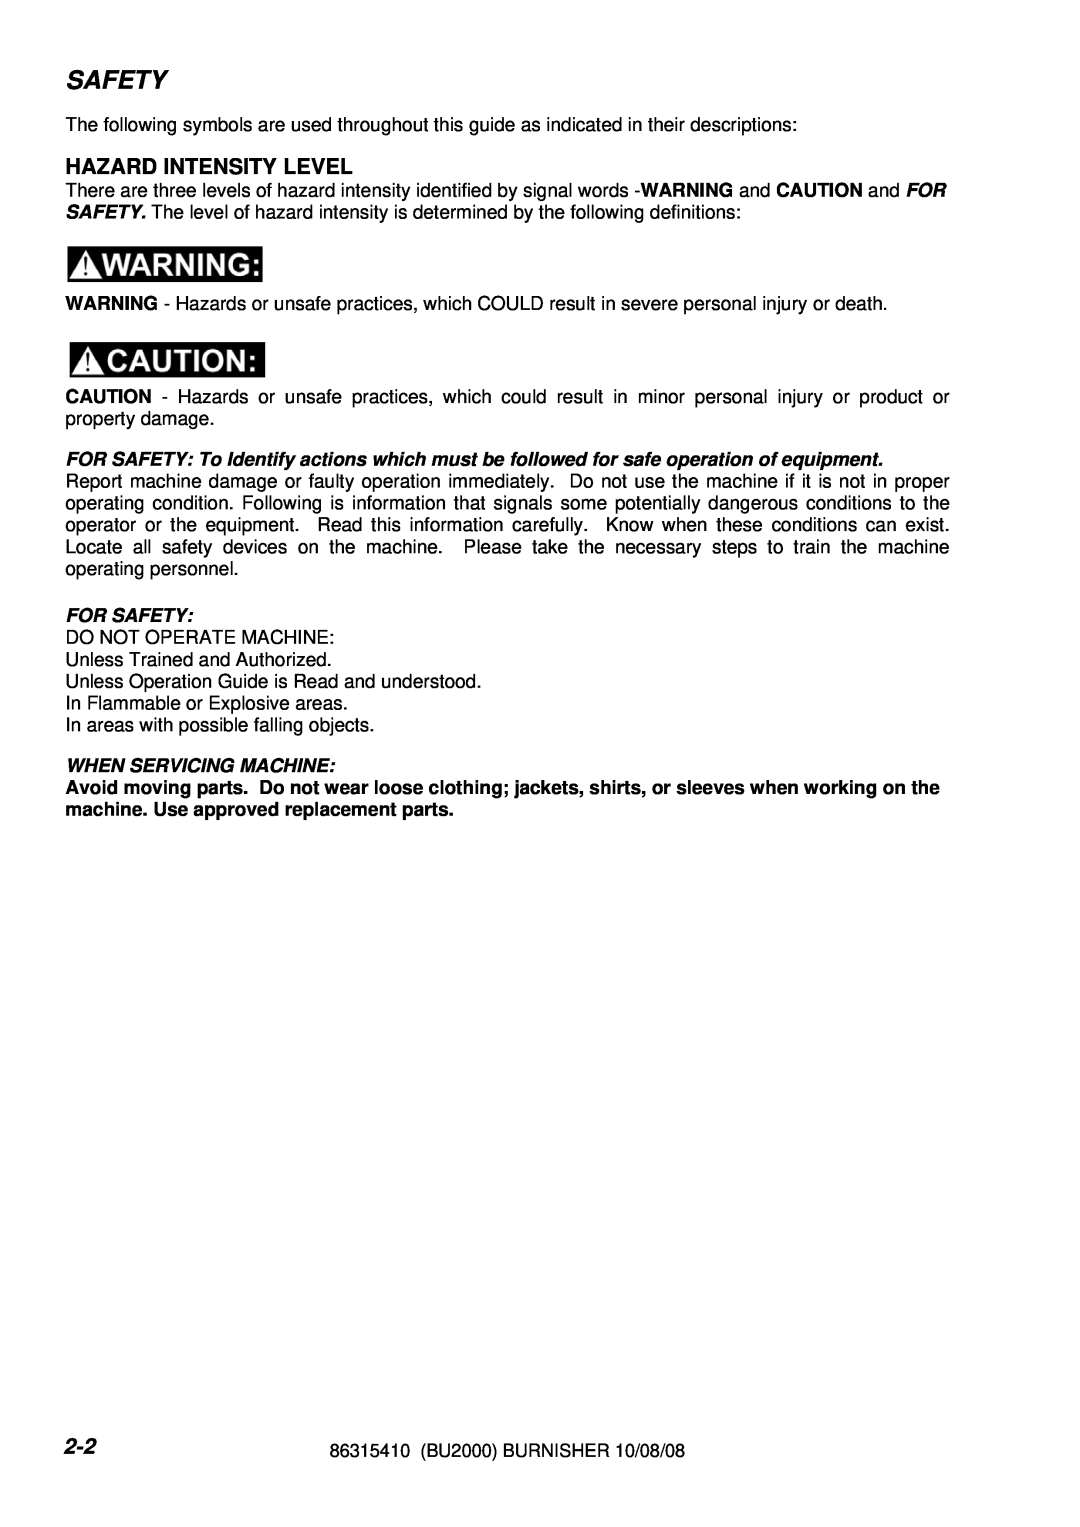 Windsor UB2000F, LB2000IA manual Hazard Intensity Level, Safety 